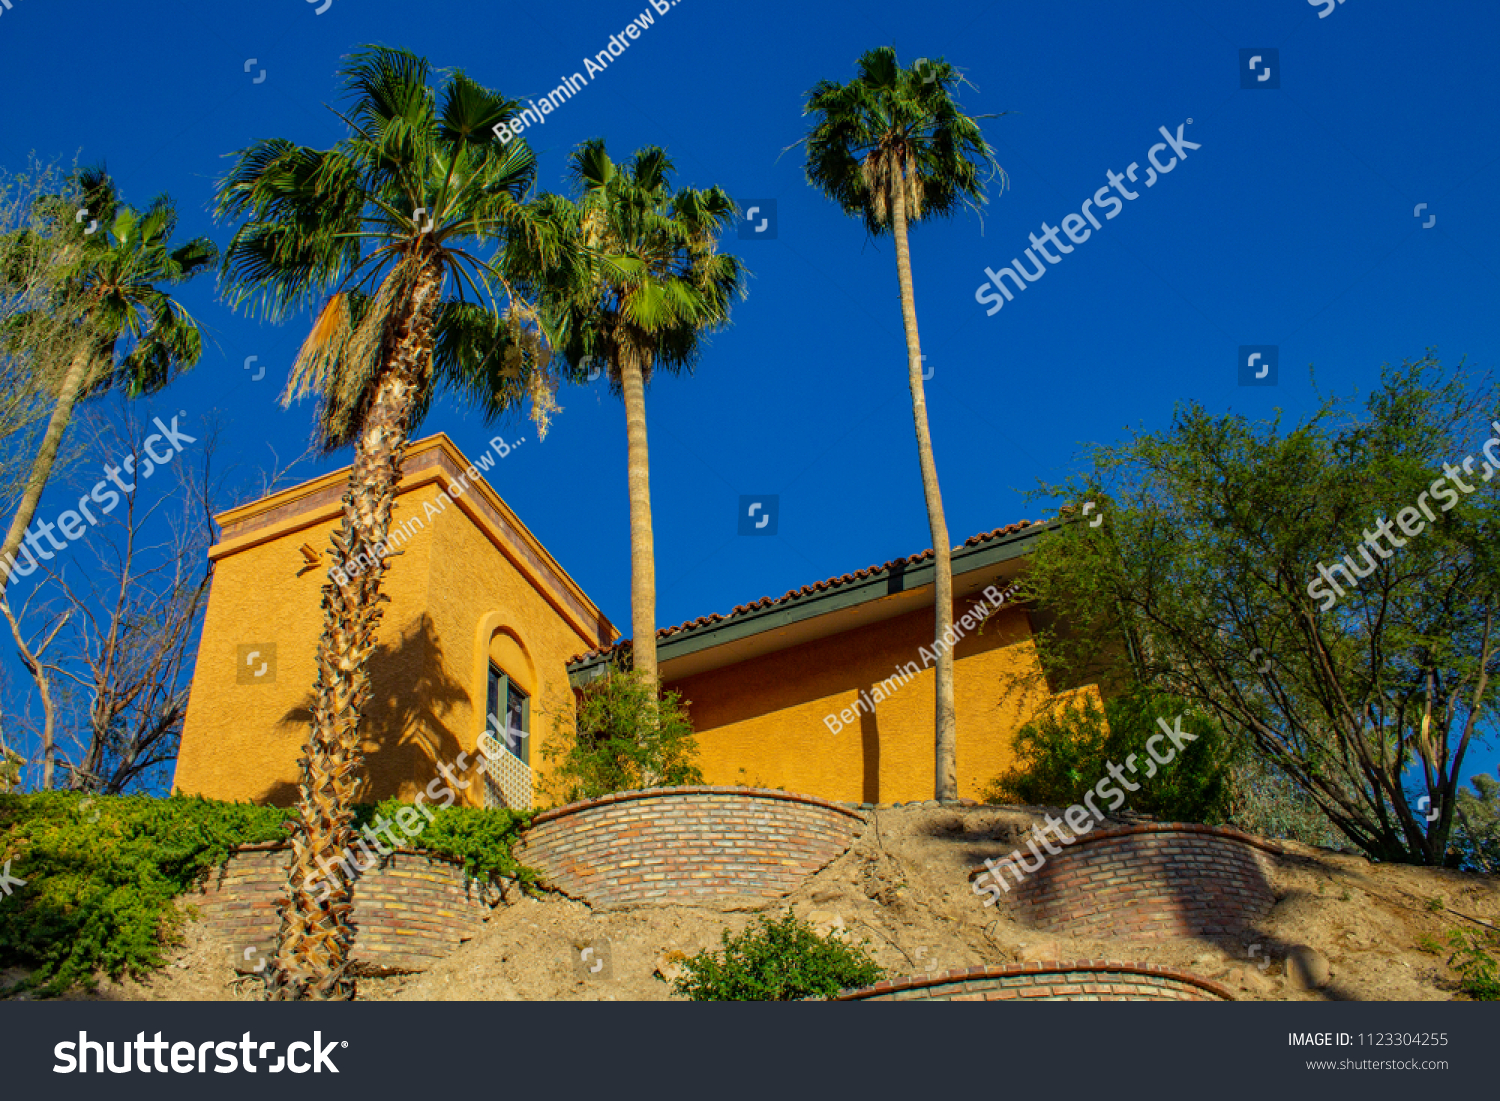 Are There Palm Trees In Sedona Arizona